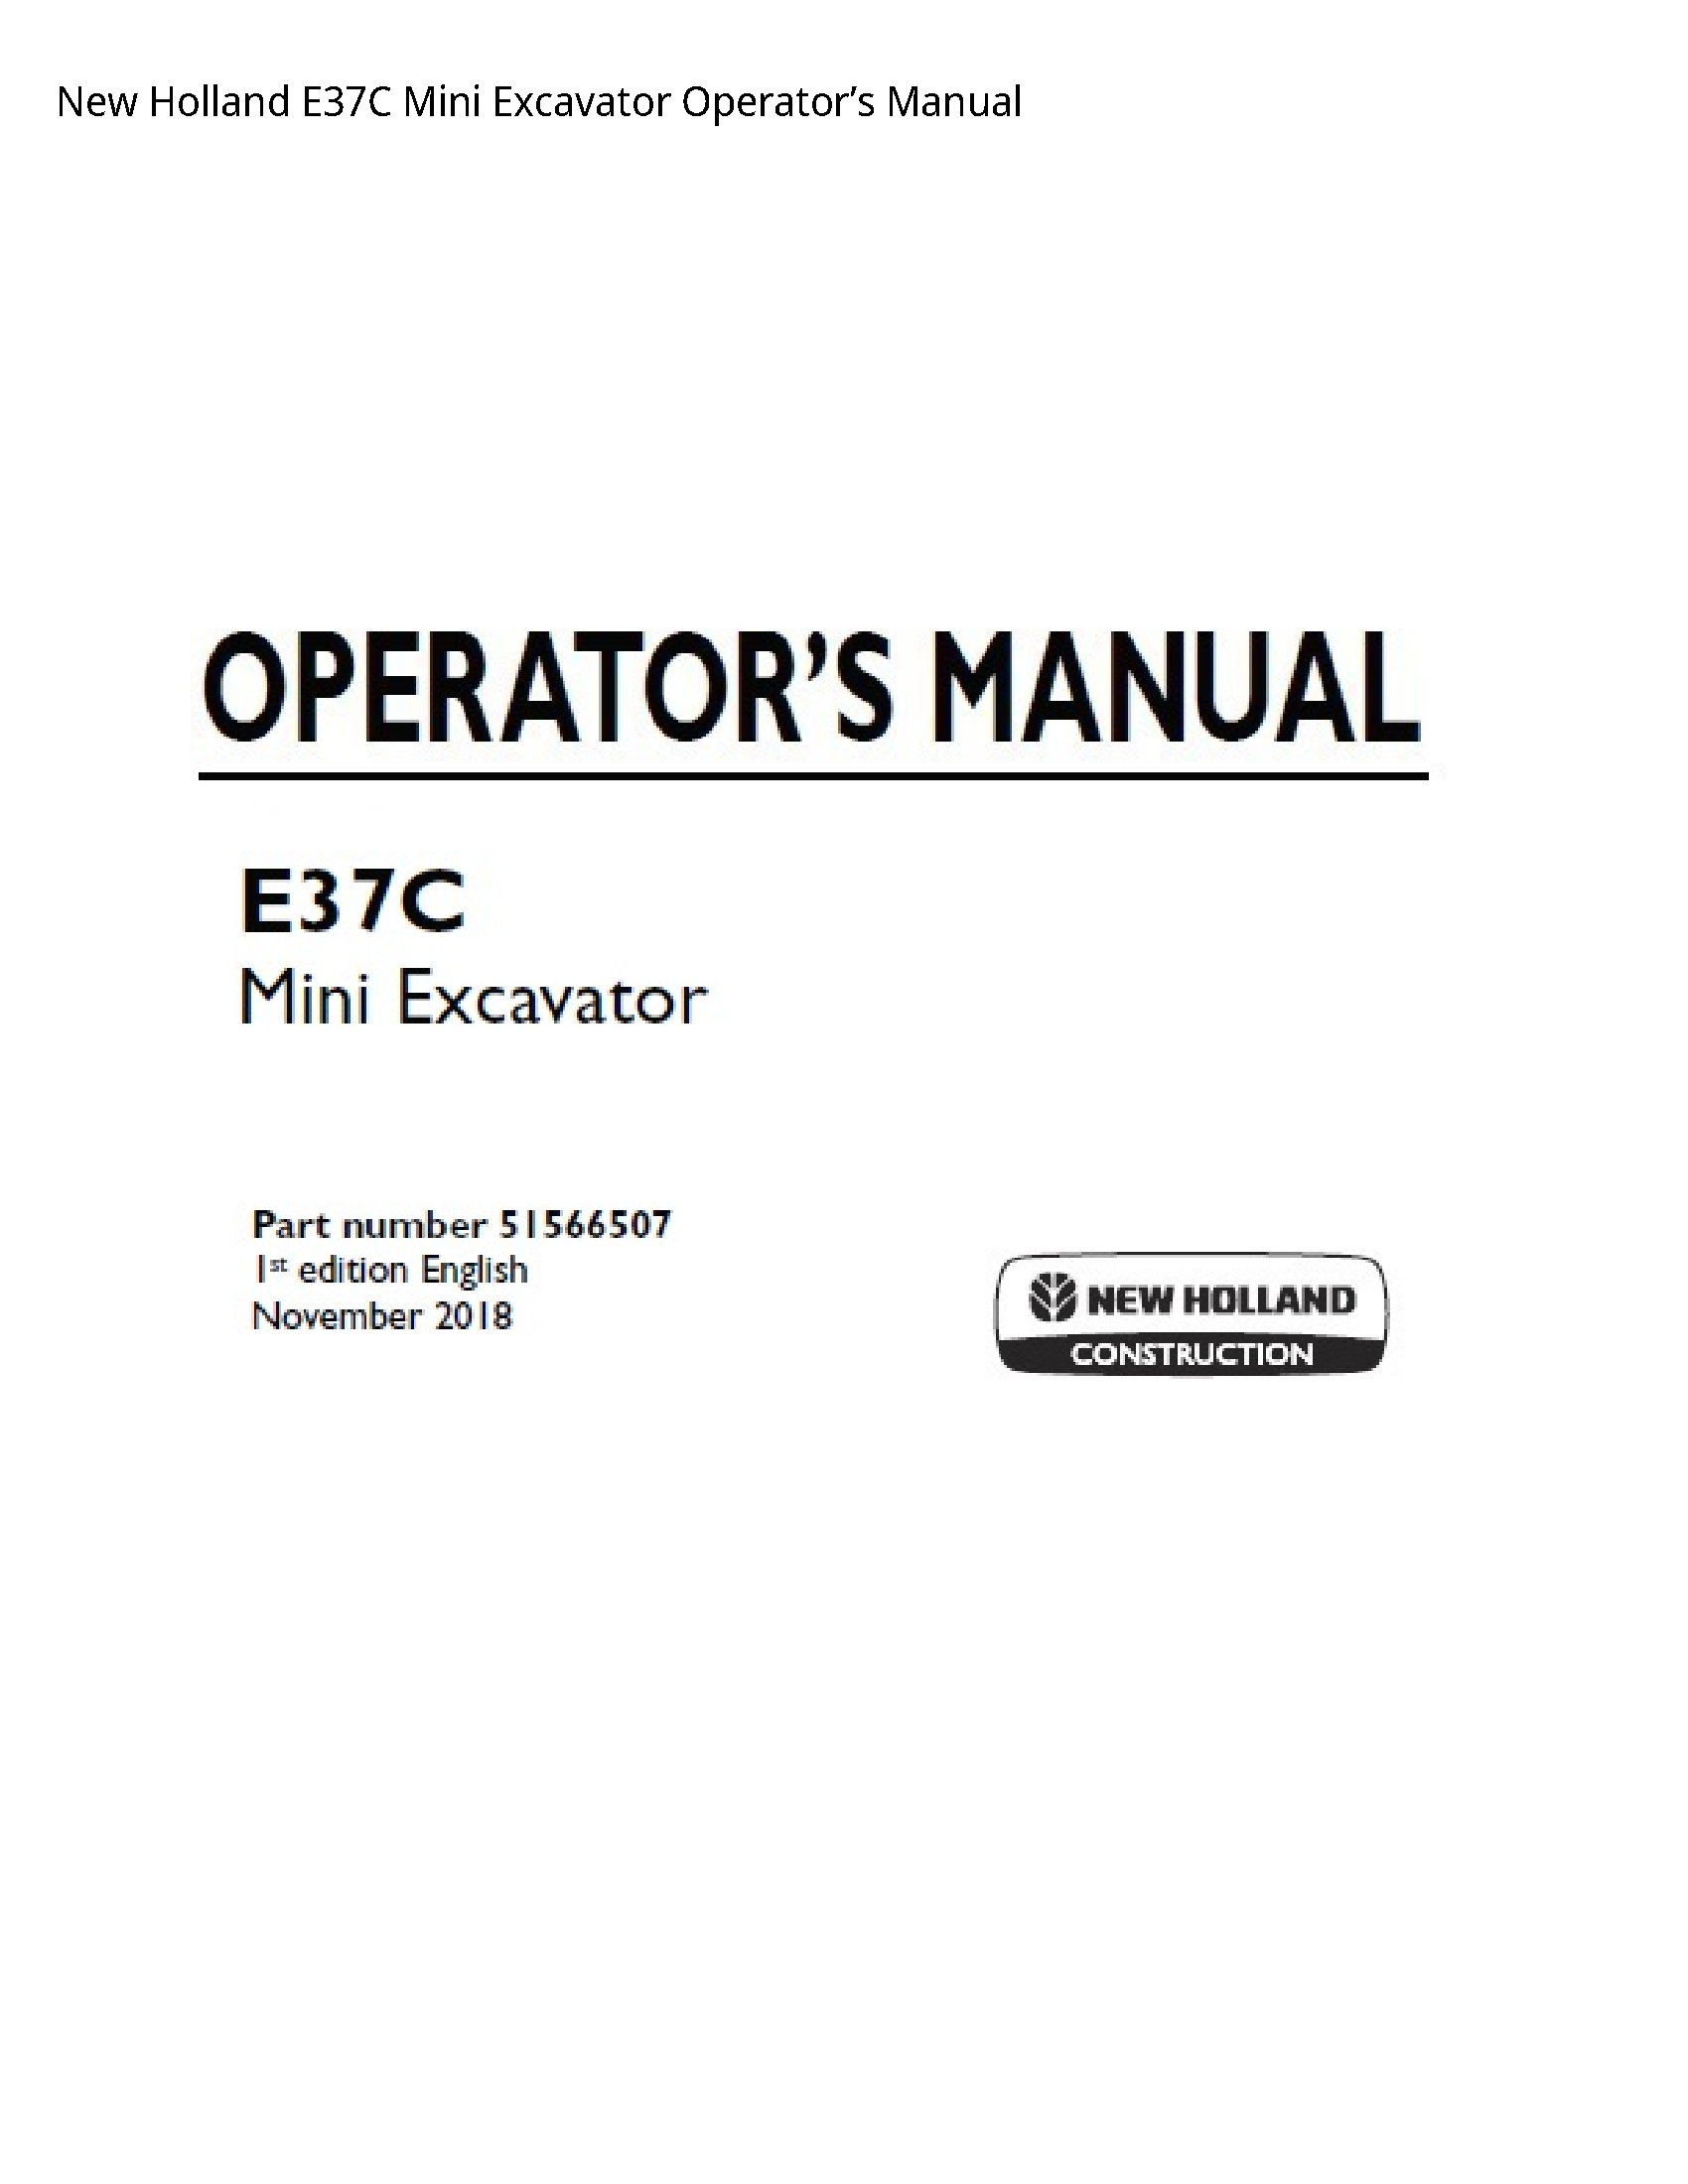 New Holland E37C Mini Excavator Operator’s manual